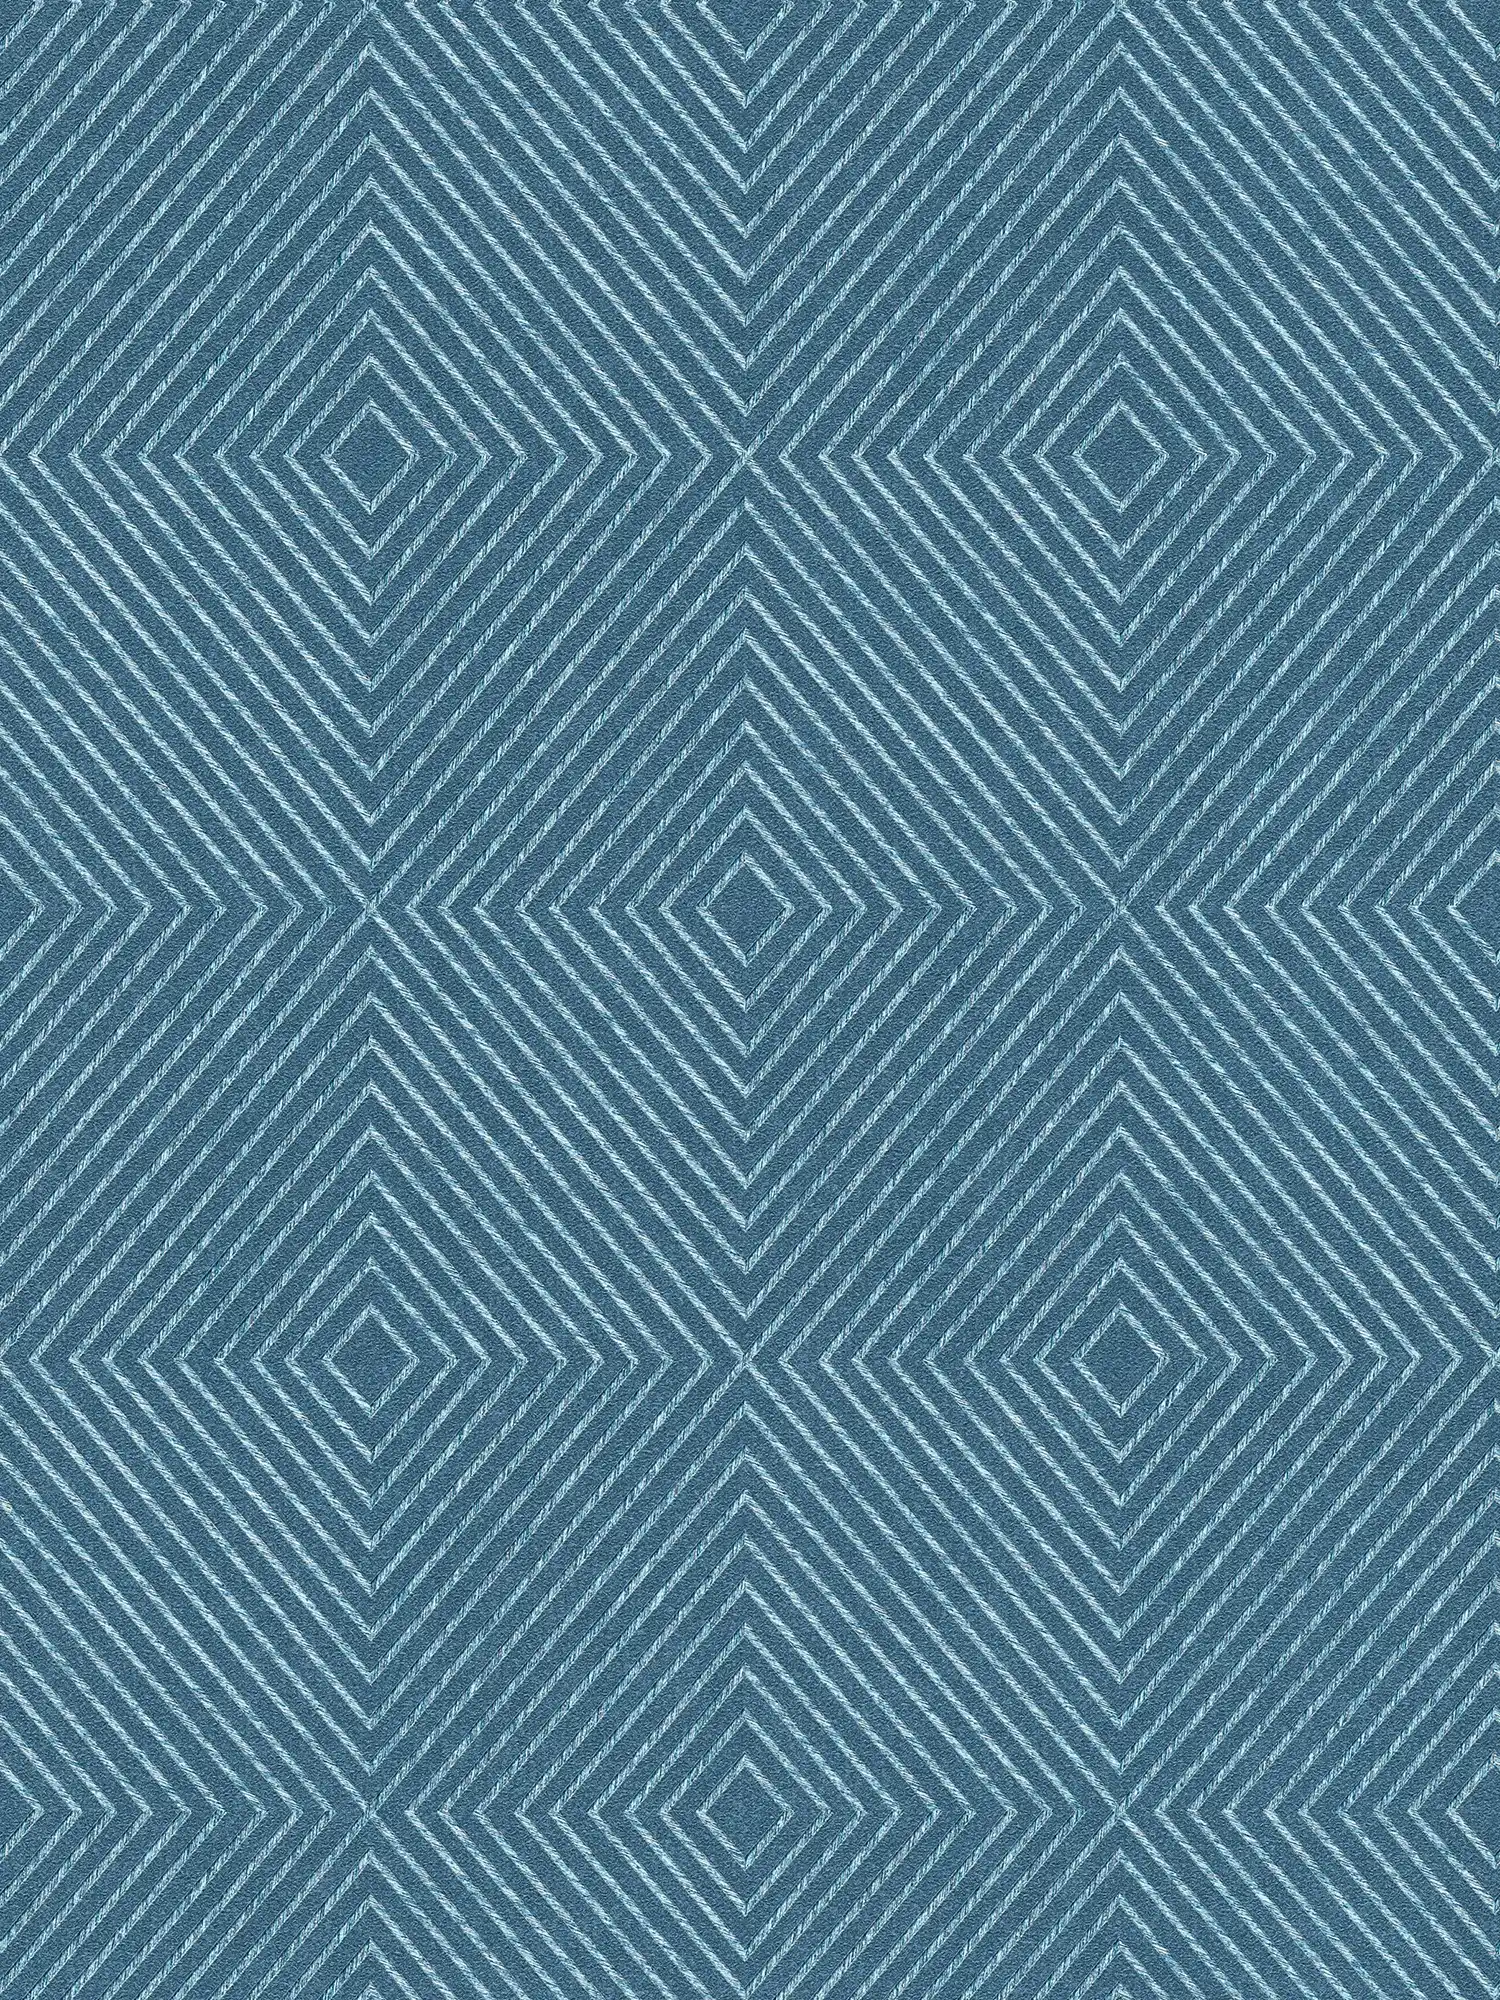 Papel pintado de diseño gráfico, estilo escandinavo - azul, plata
